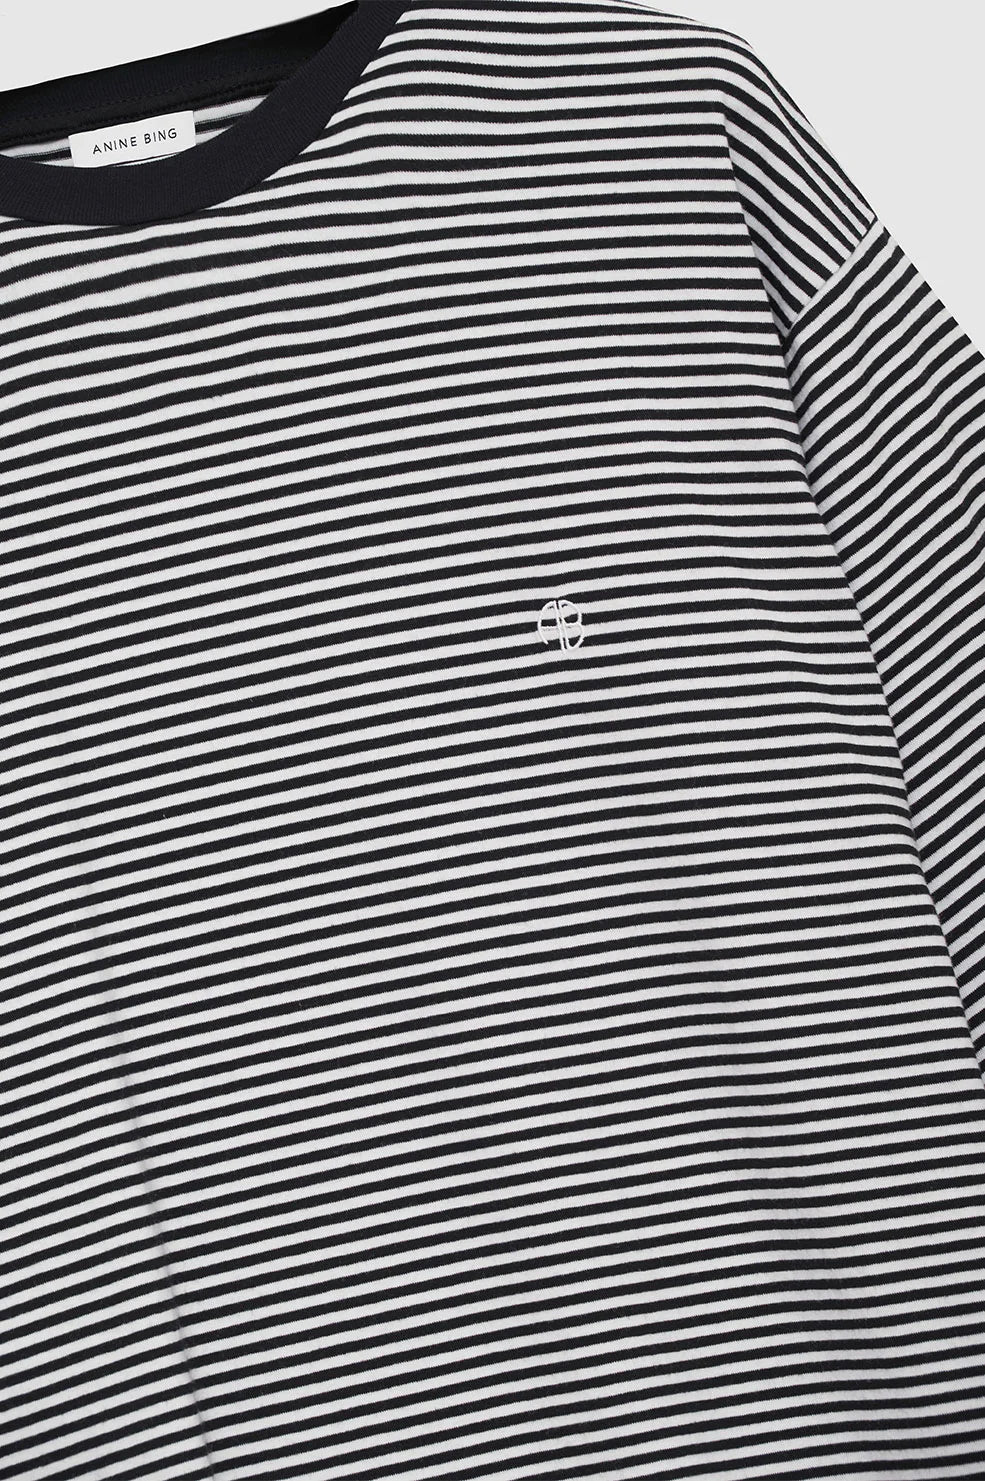 Anine Bing Bo Tee - Black And White Stripe | Denim Iniquity